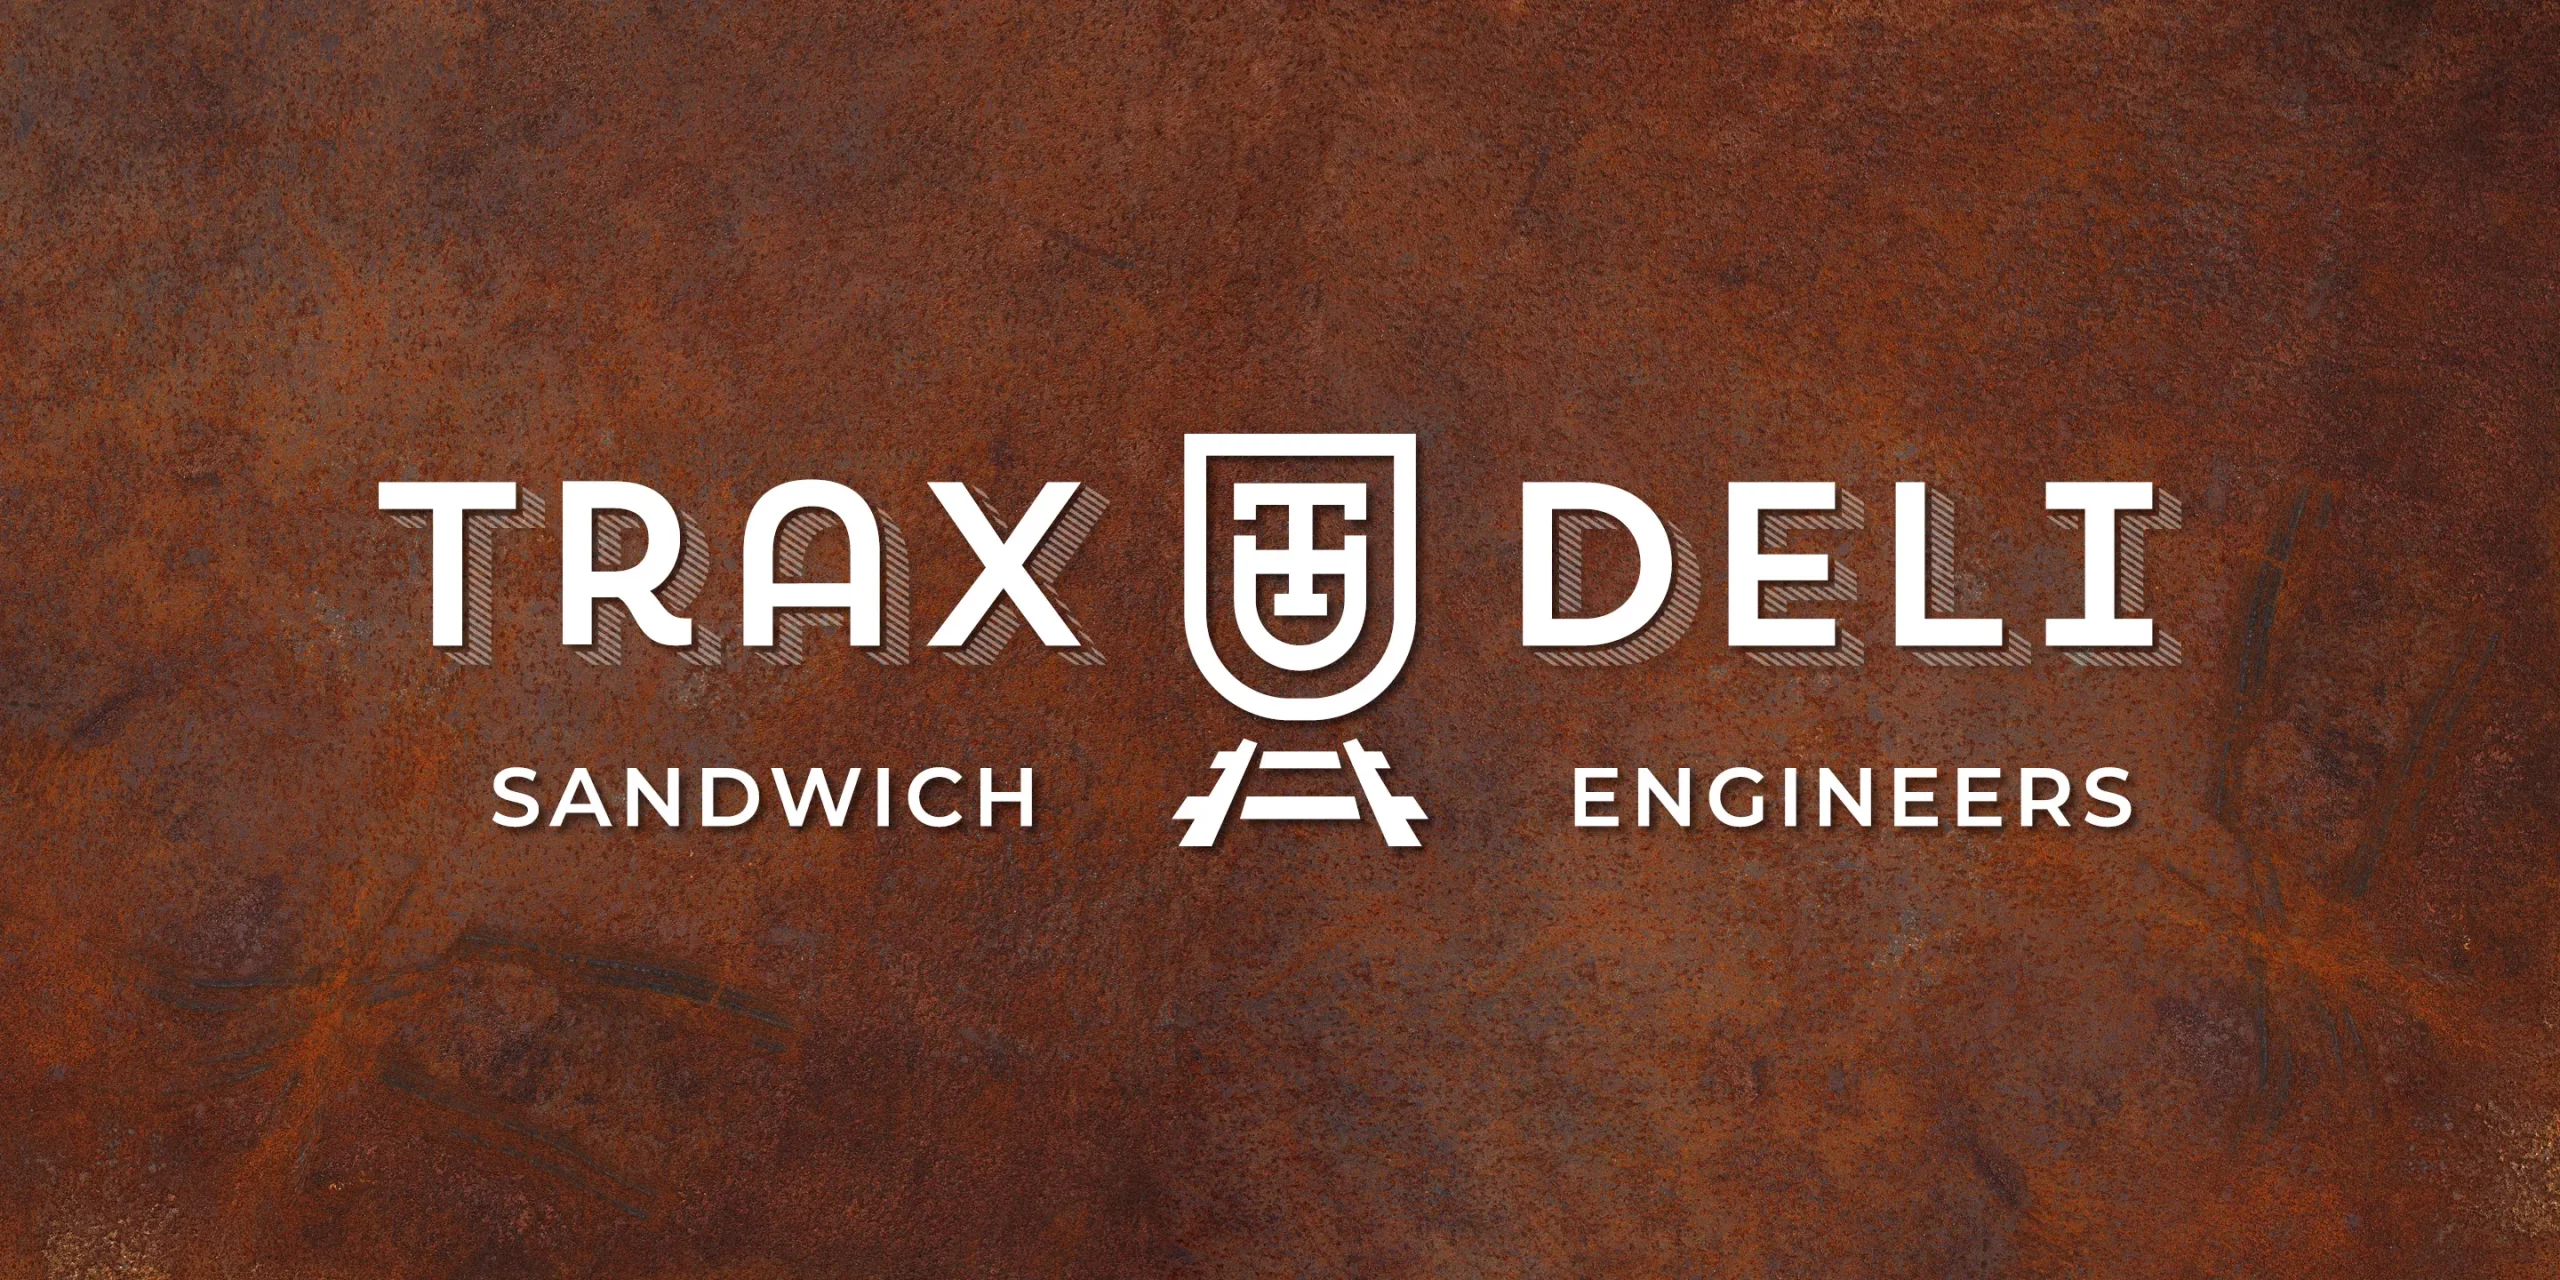 Trax Deli Branding, Primary Logo